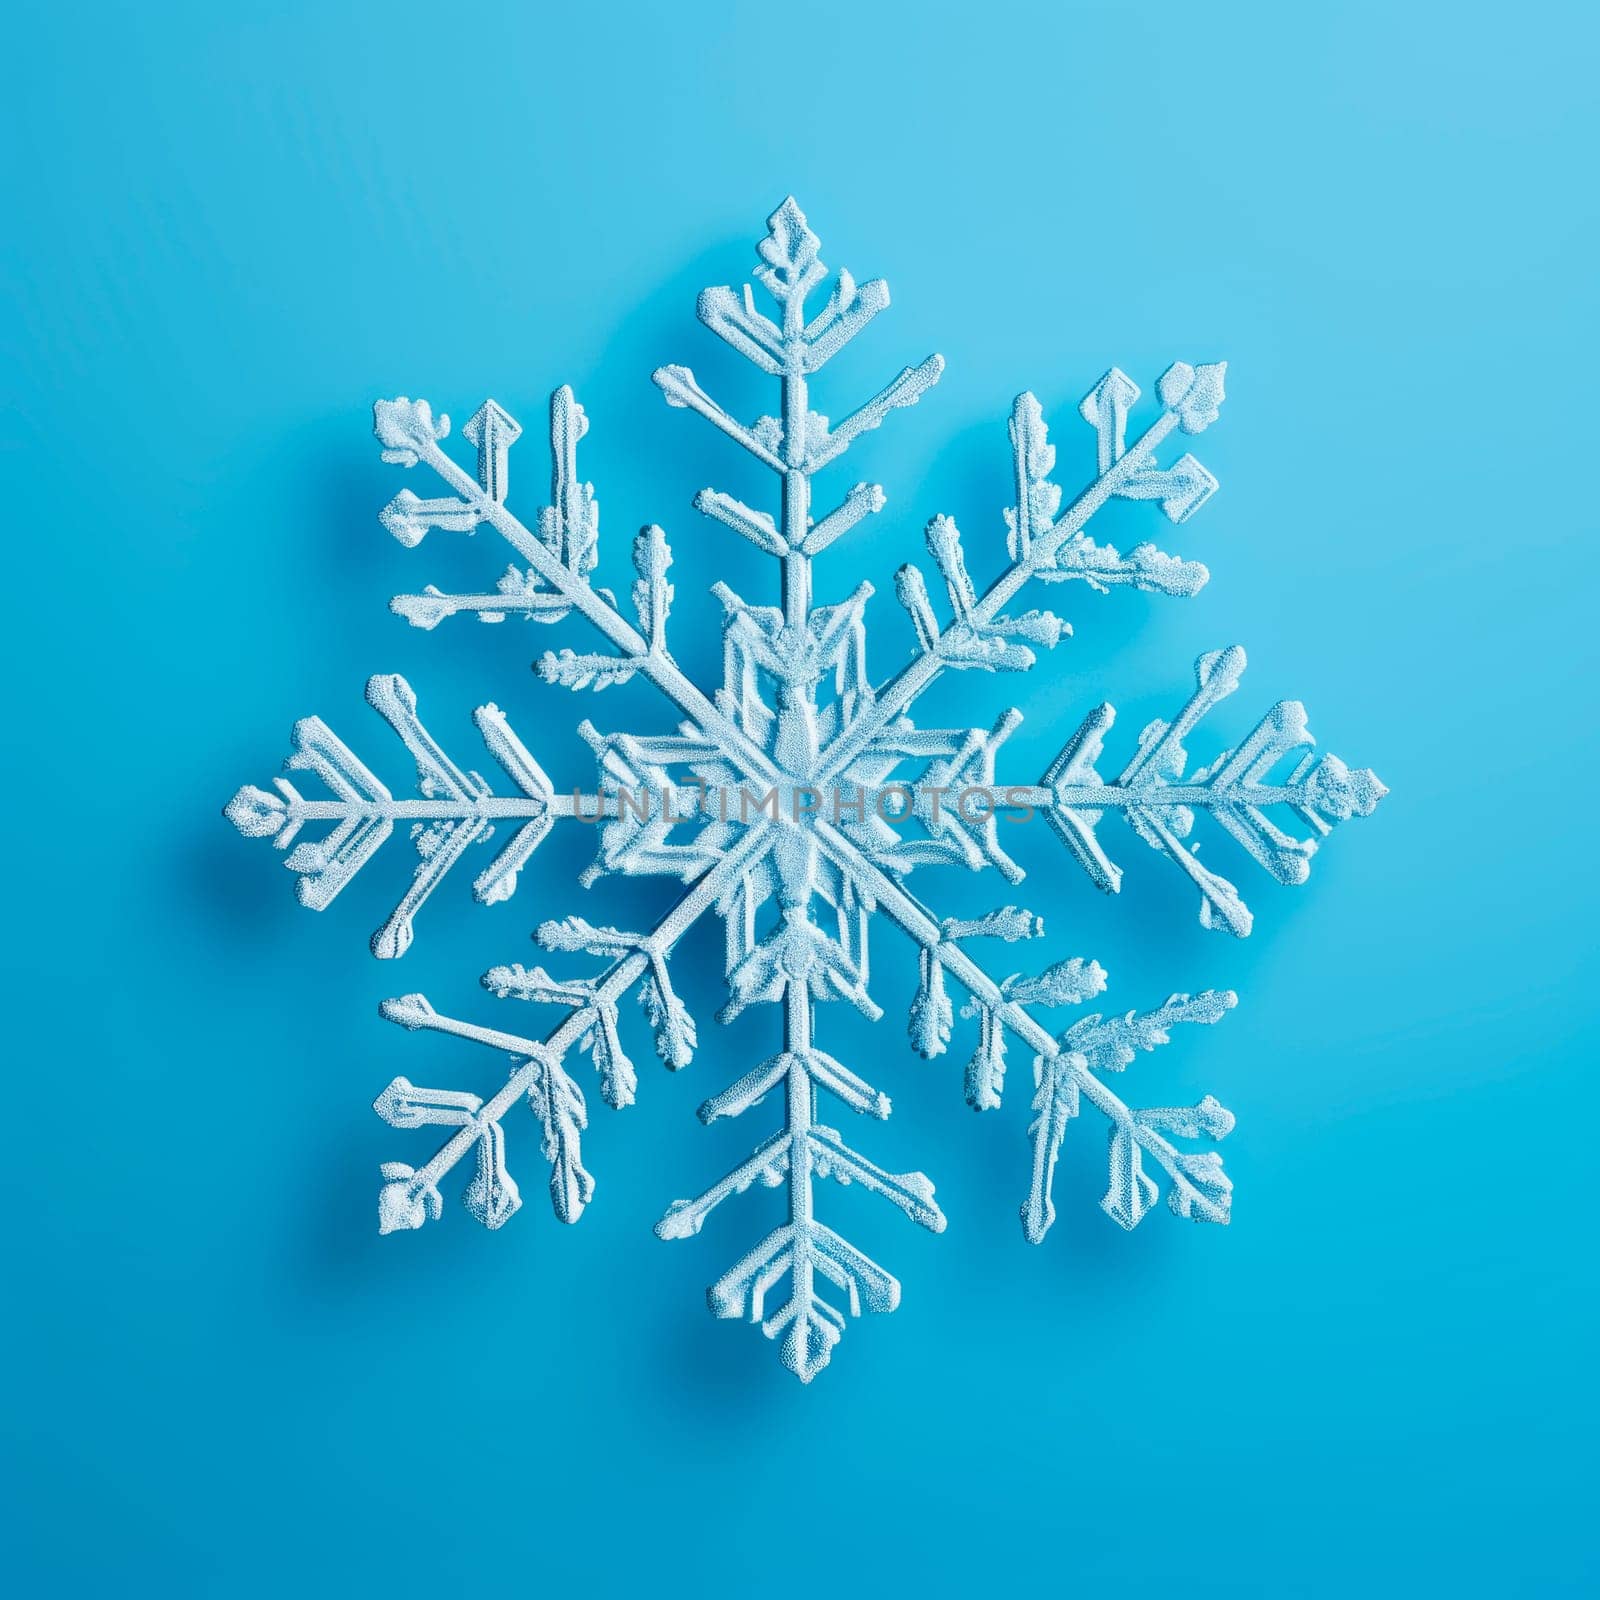 Snowflake close-up, minimalism.